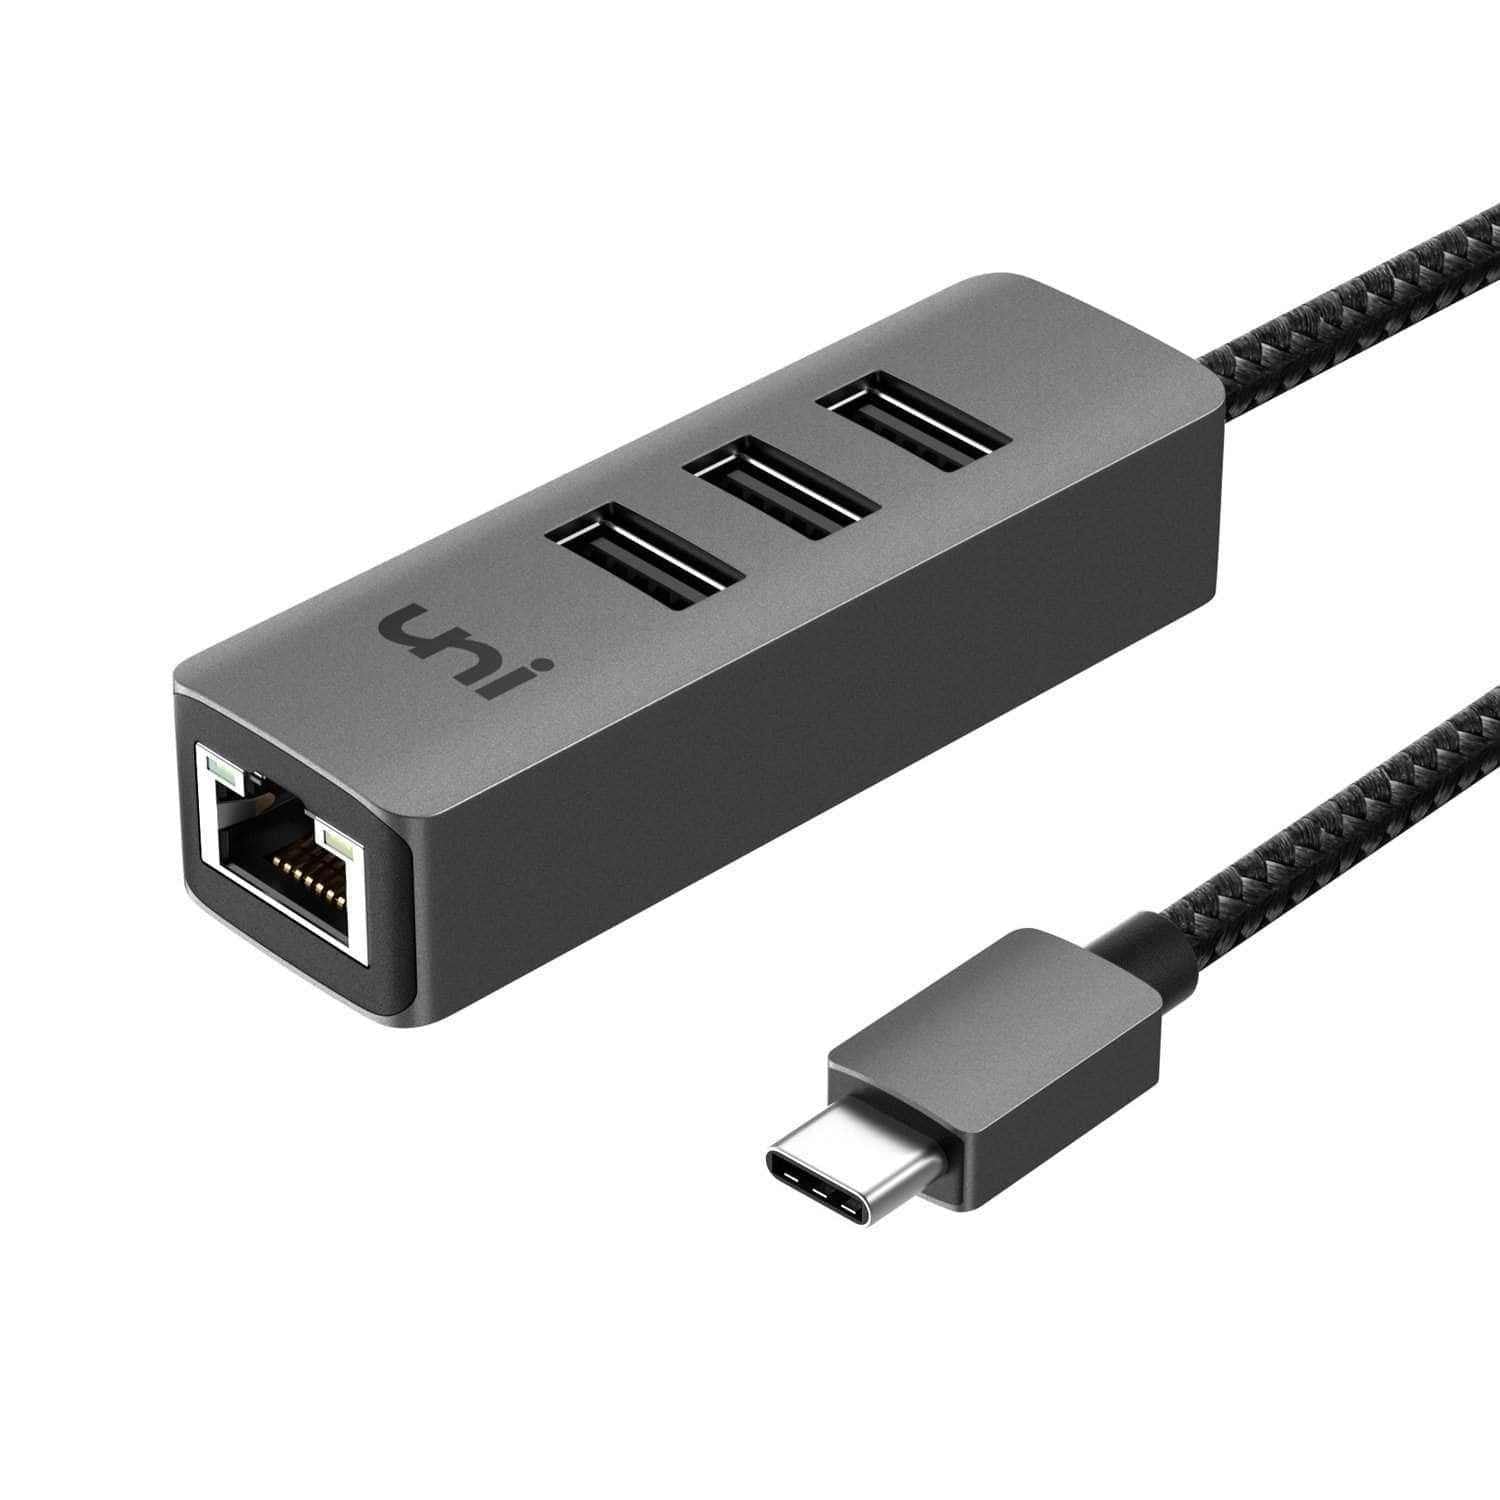 Pessimistisch schedel uitroepen uni® USB C Hub with 1G Ethernet, USB Type C USB 3.0 Adaptor | Super Solid